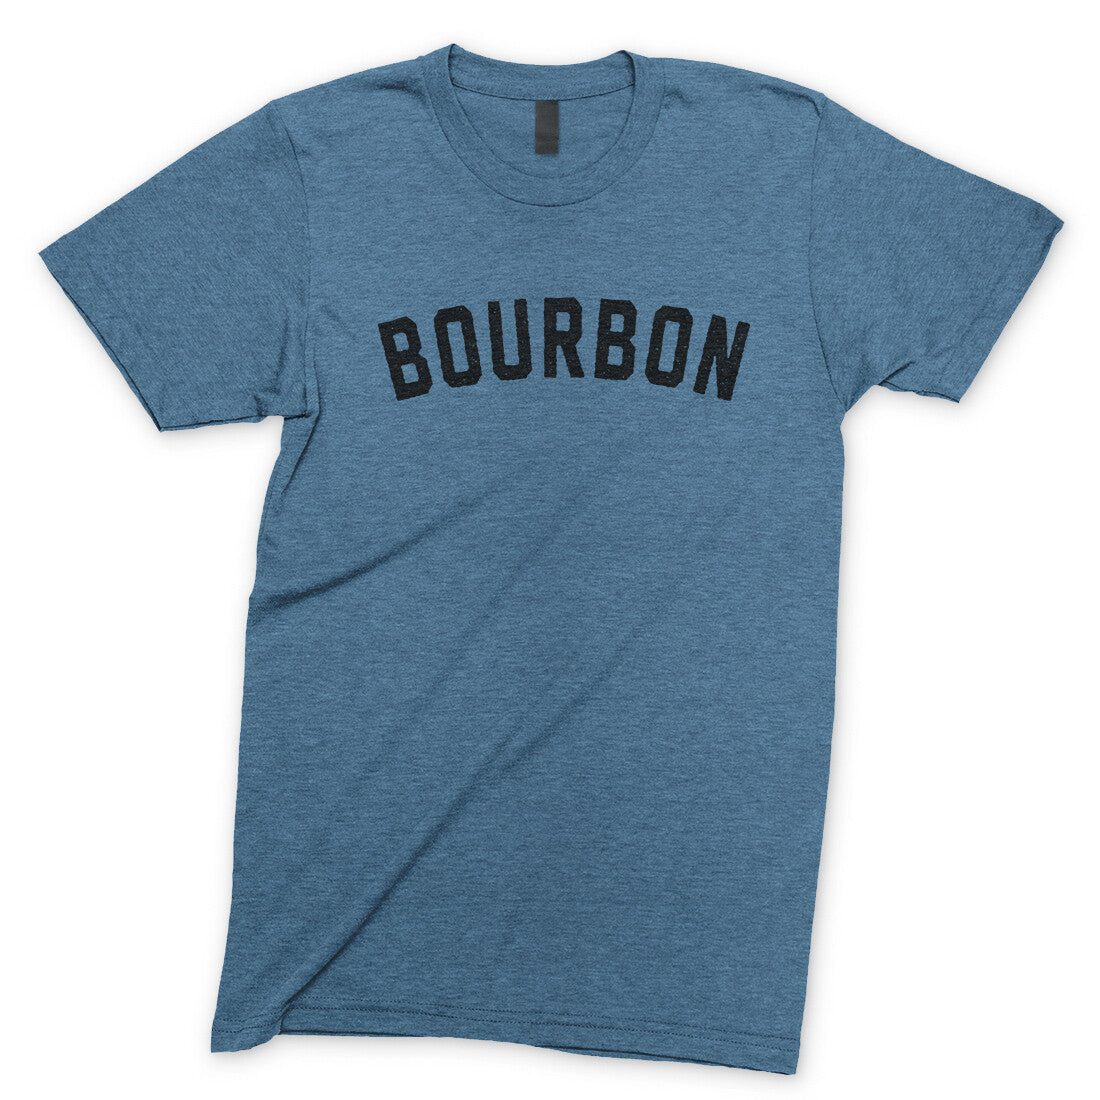 Bourbon in Heather Indigo Color